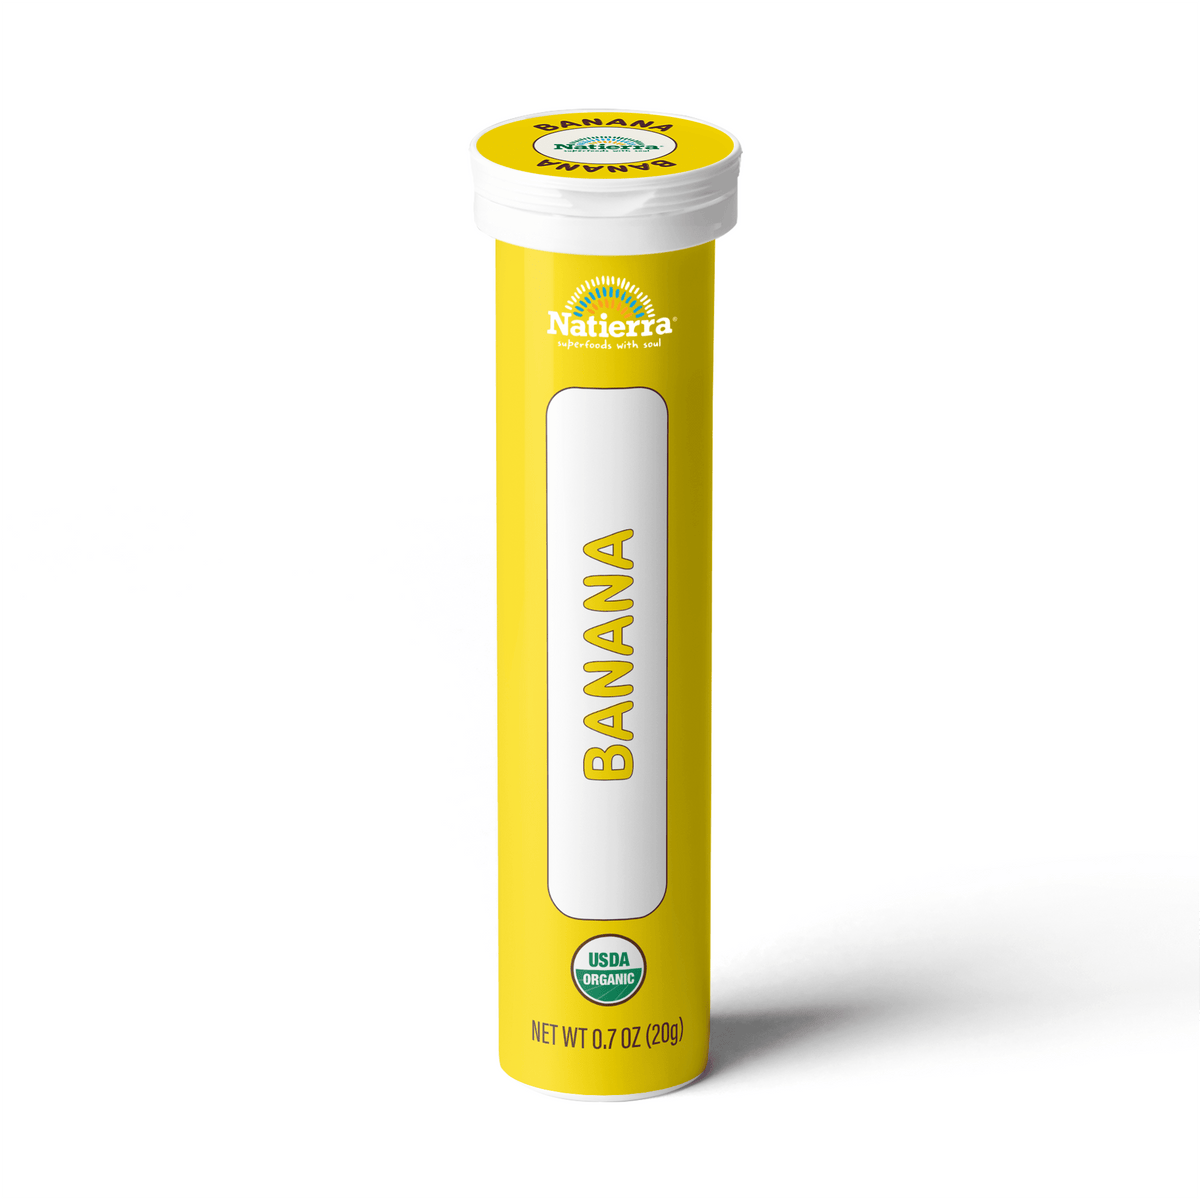 Natierra Organic Banana Smoothie Powder 0.7 oz tube